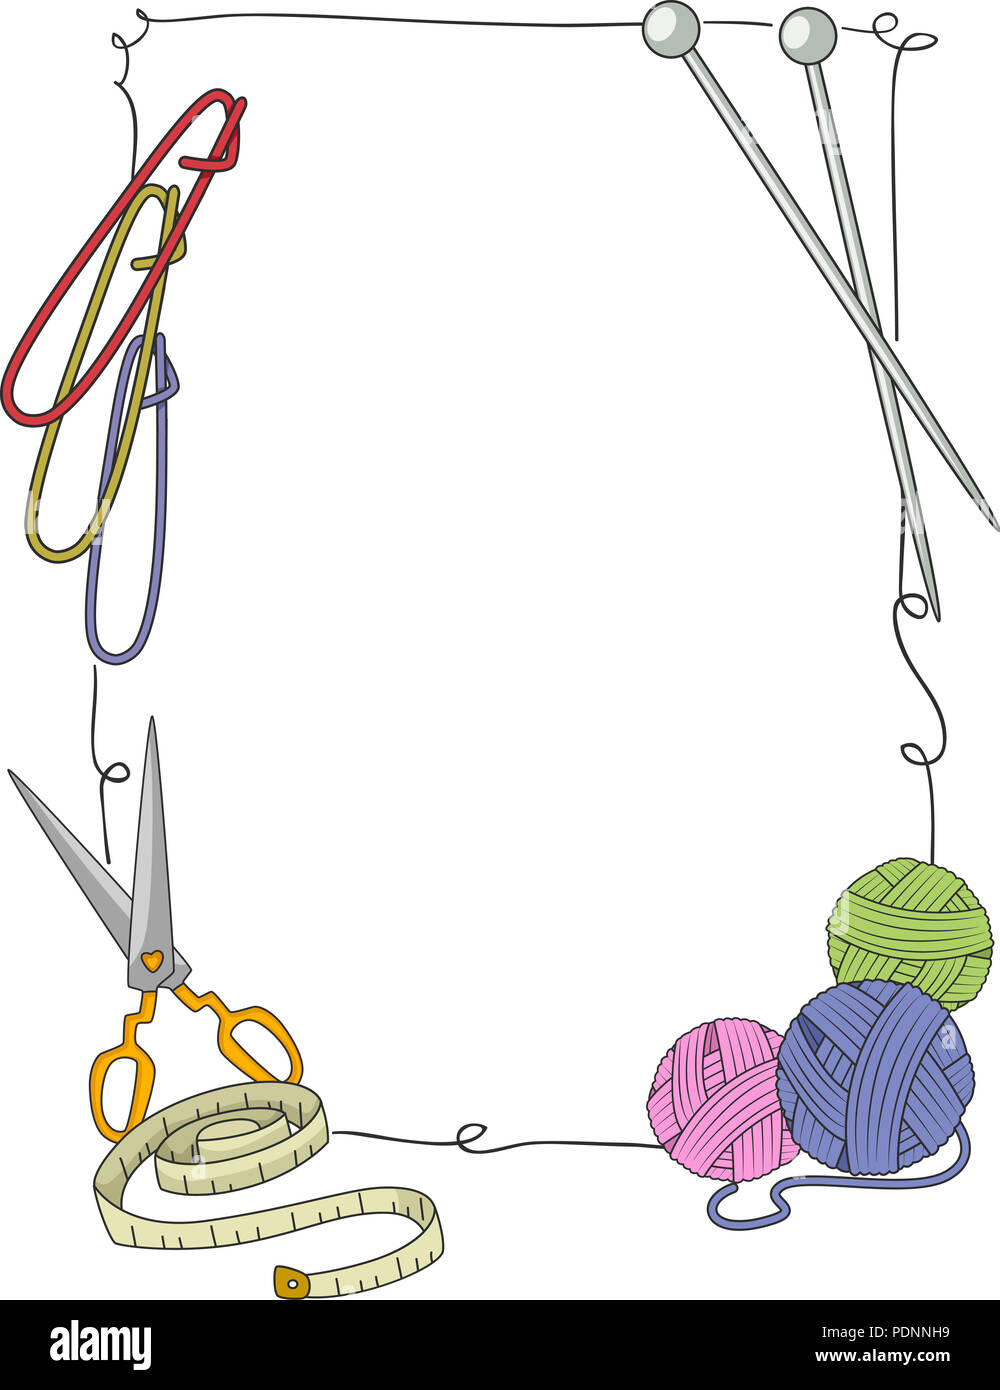 Illustration of Knitting Tools from Needles, Thread, Scissors, Tape ...